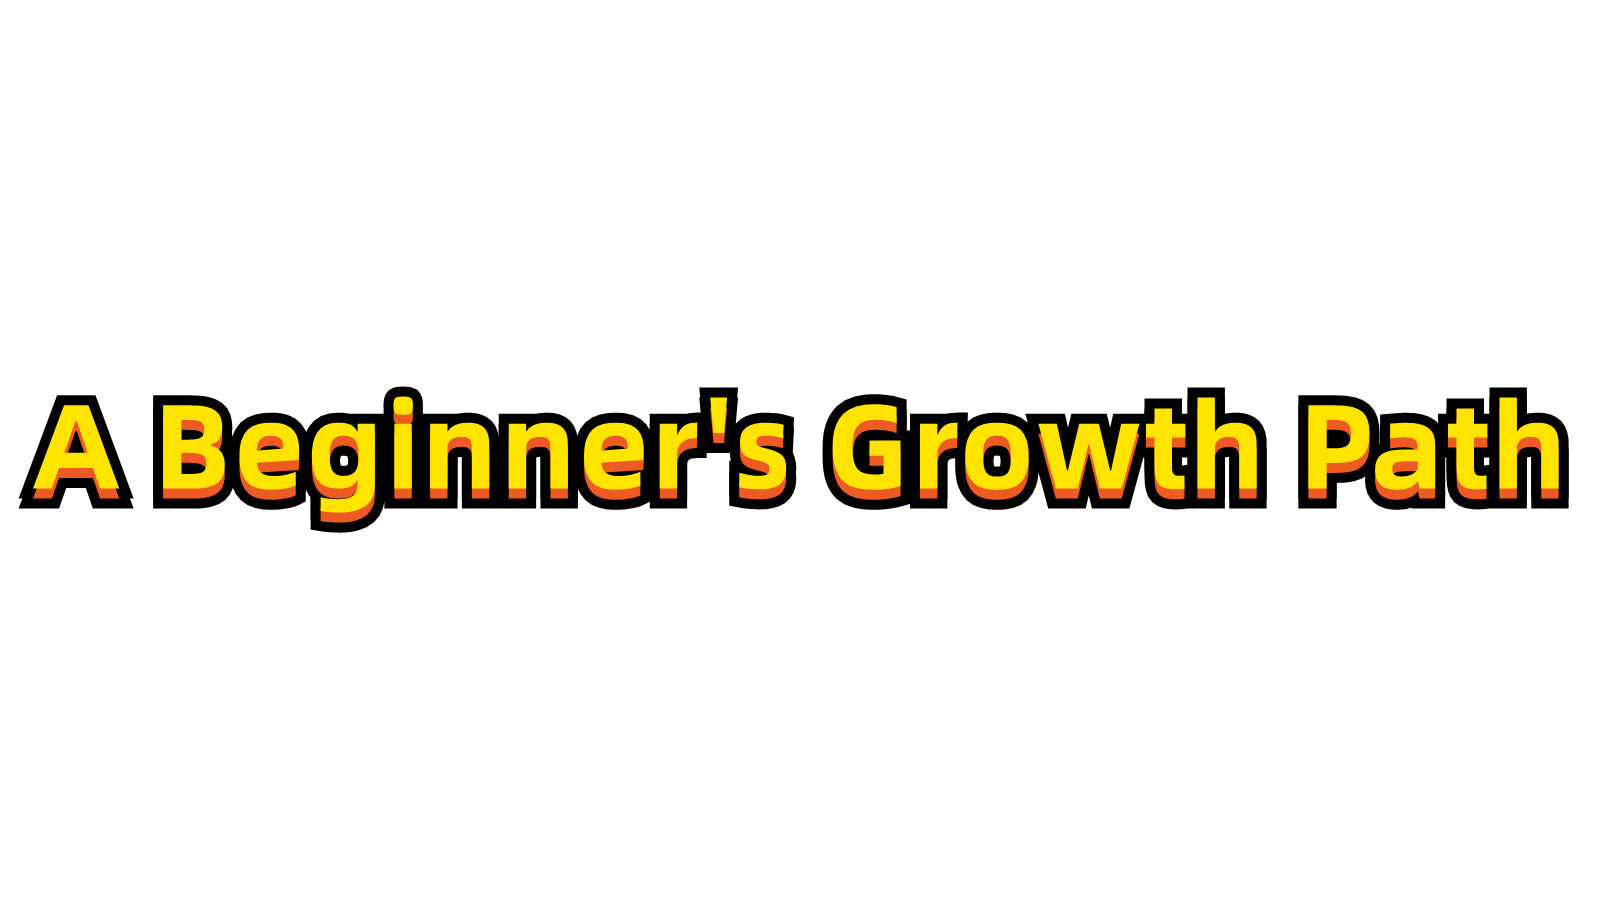 A Beginner's Growth Path